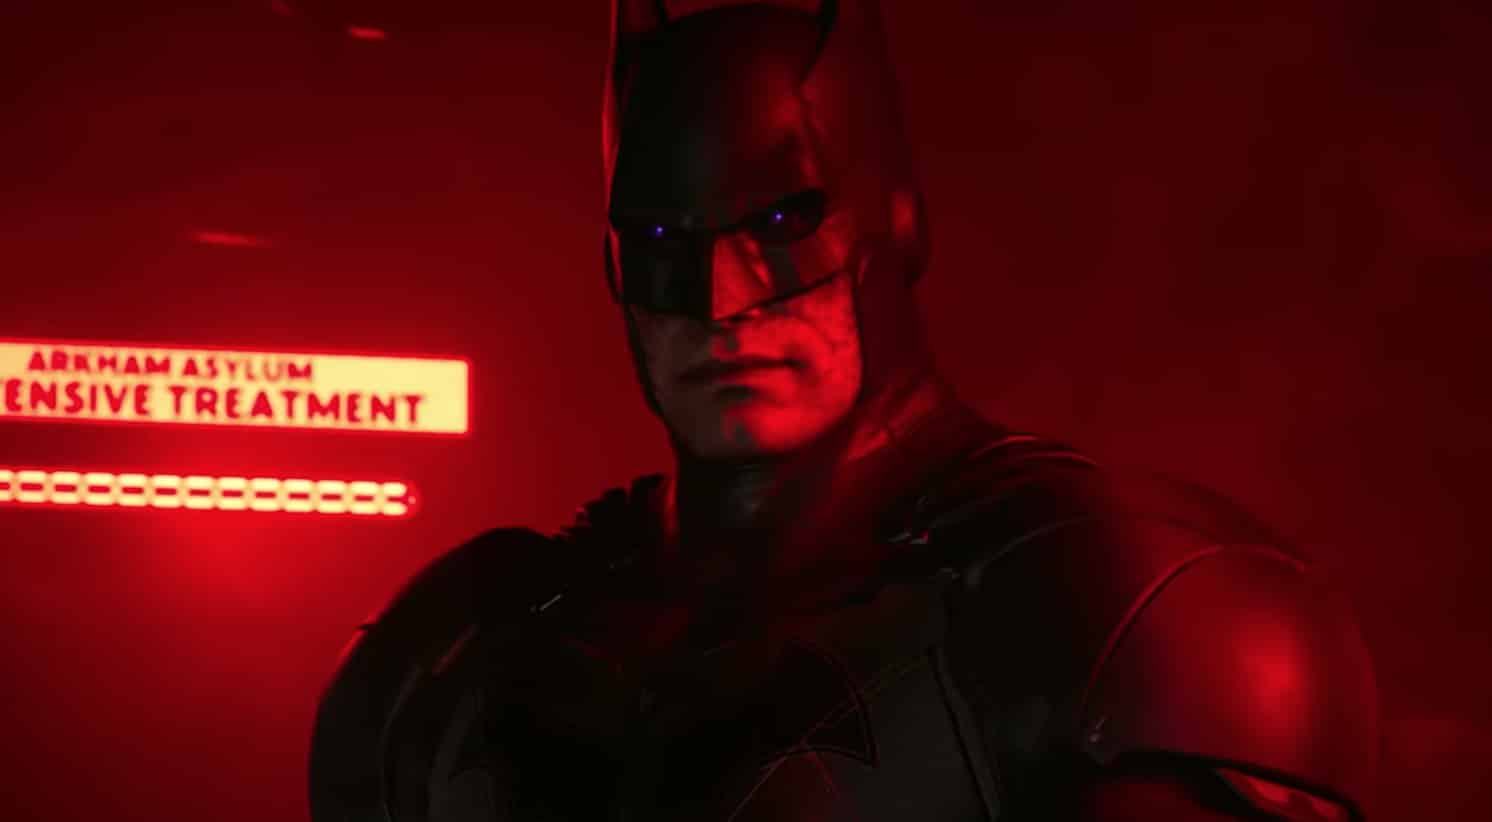 Batman: Return To Arkham' Gets A Release Date, Still Looks Like A Mixed Bag